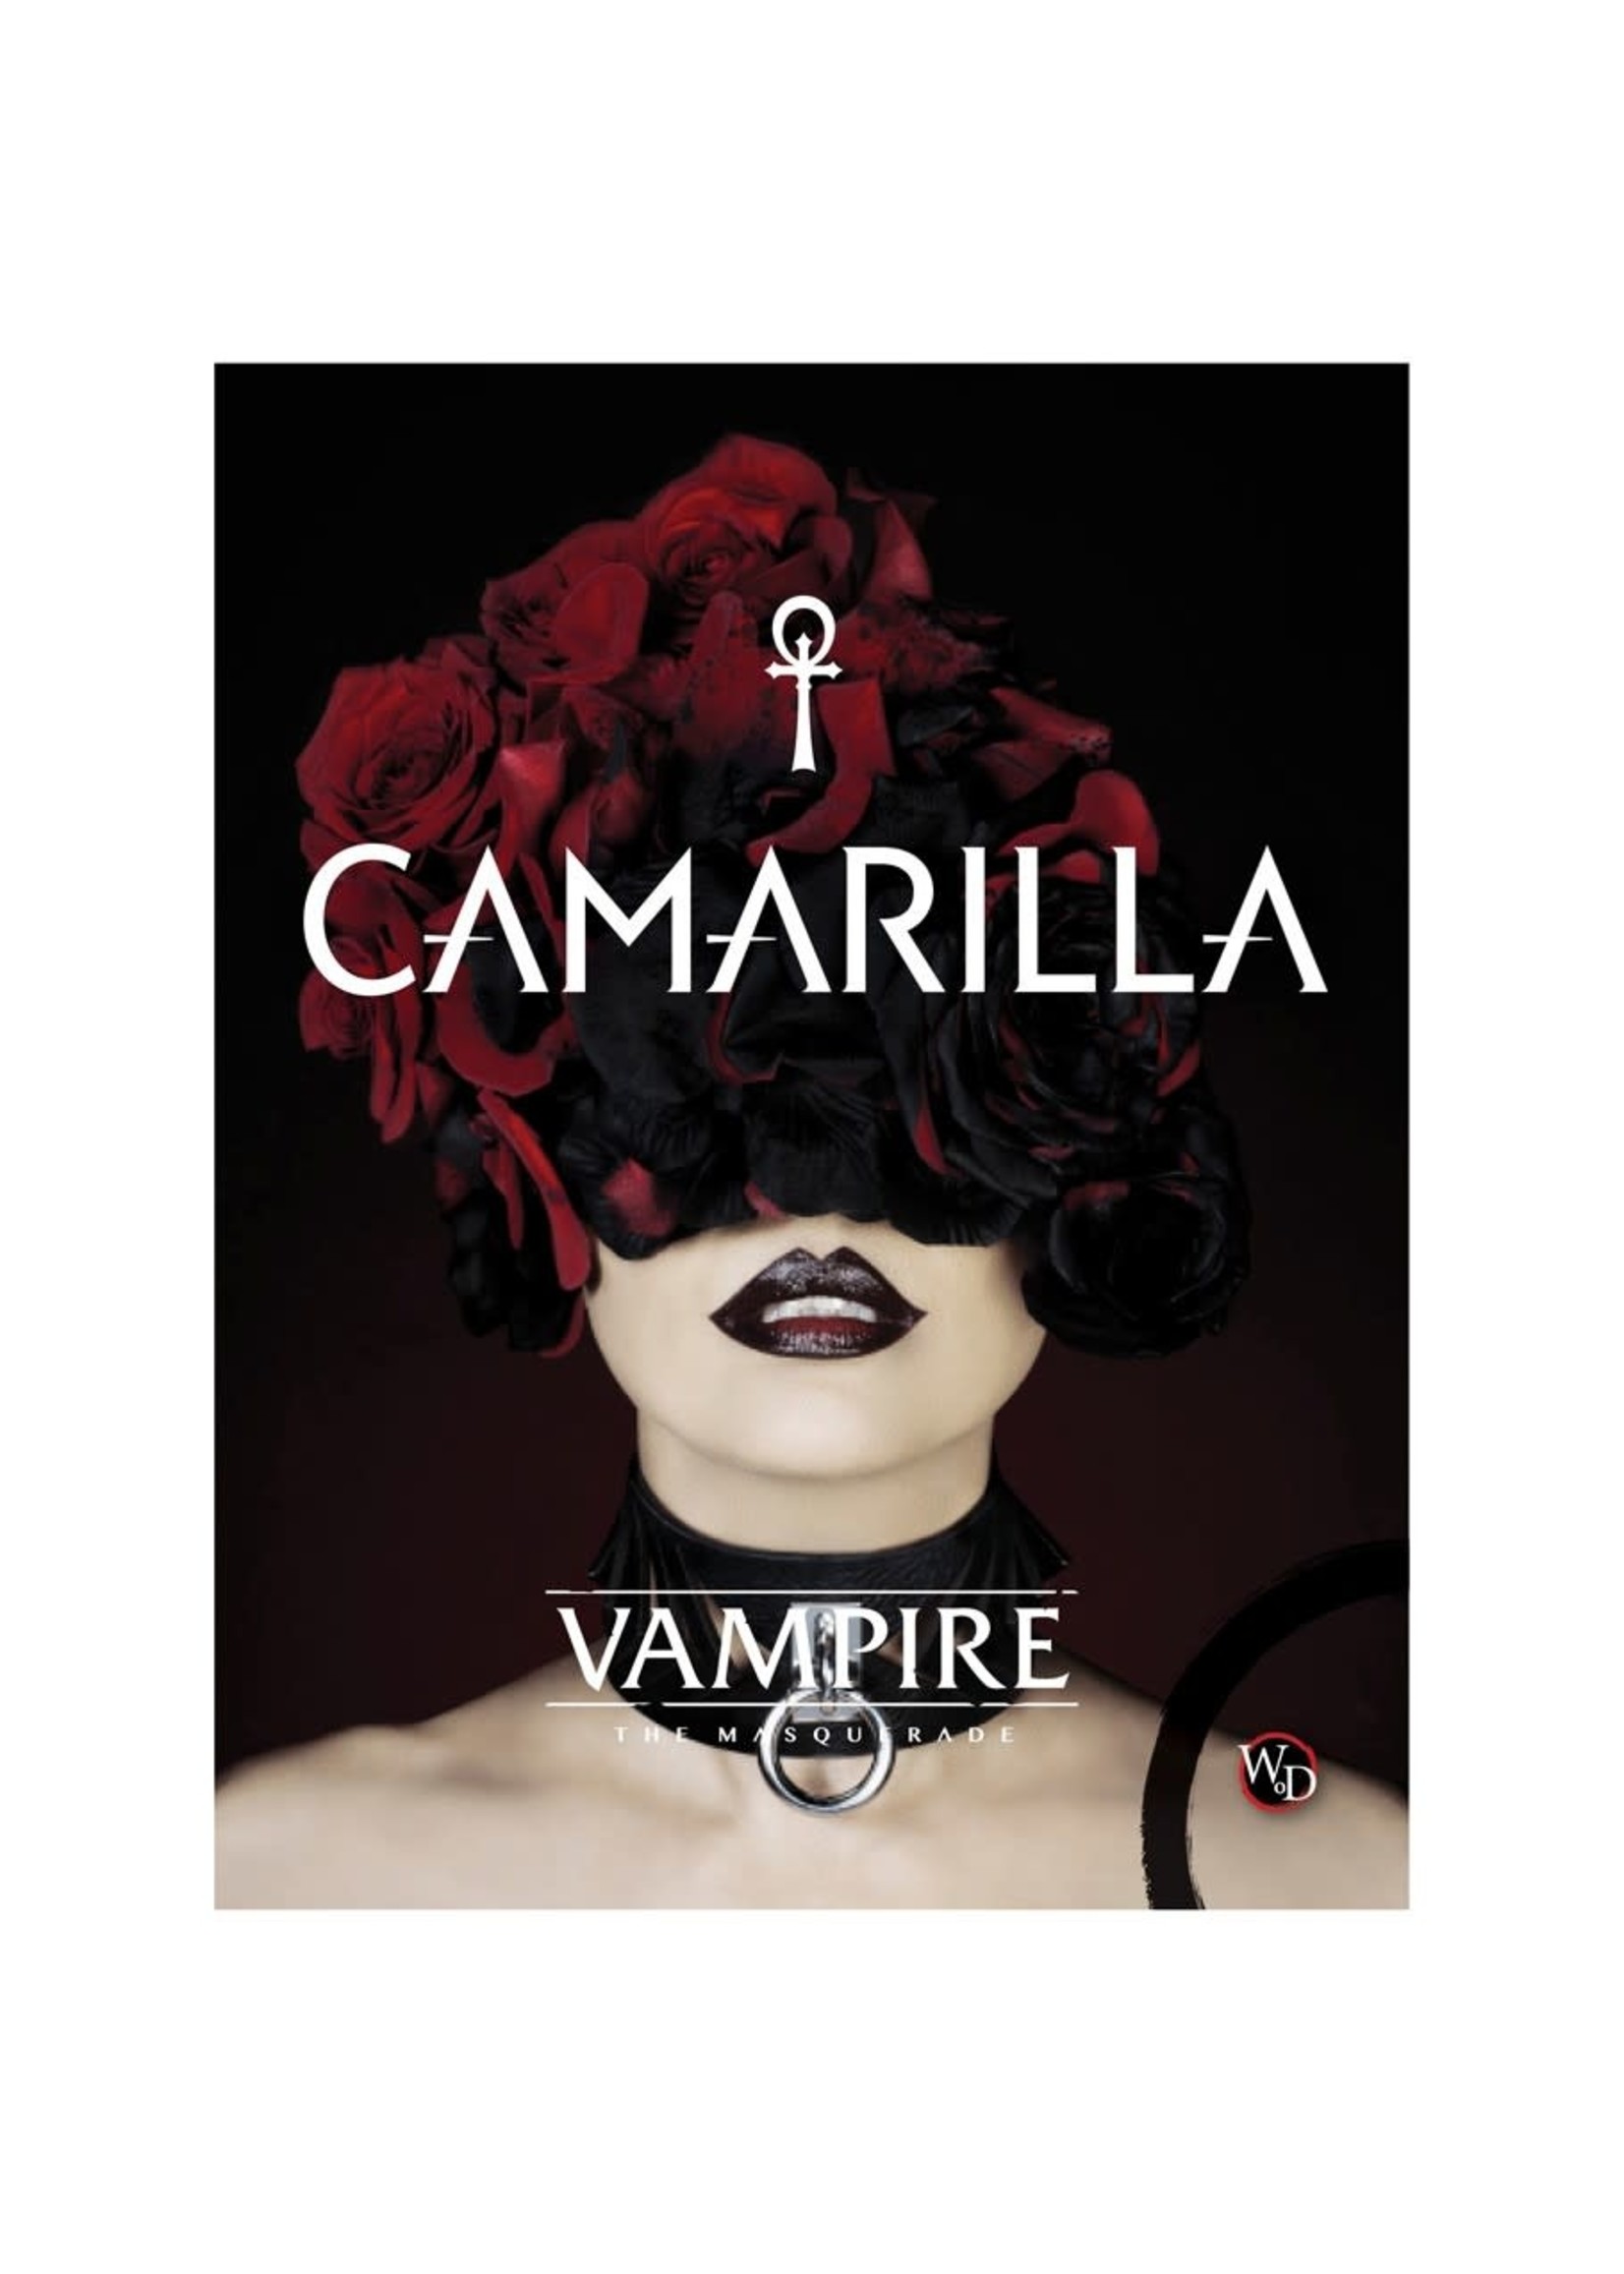 Renegade Game Studios Vampire The Masquerade: Camarilla Sourcebook